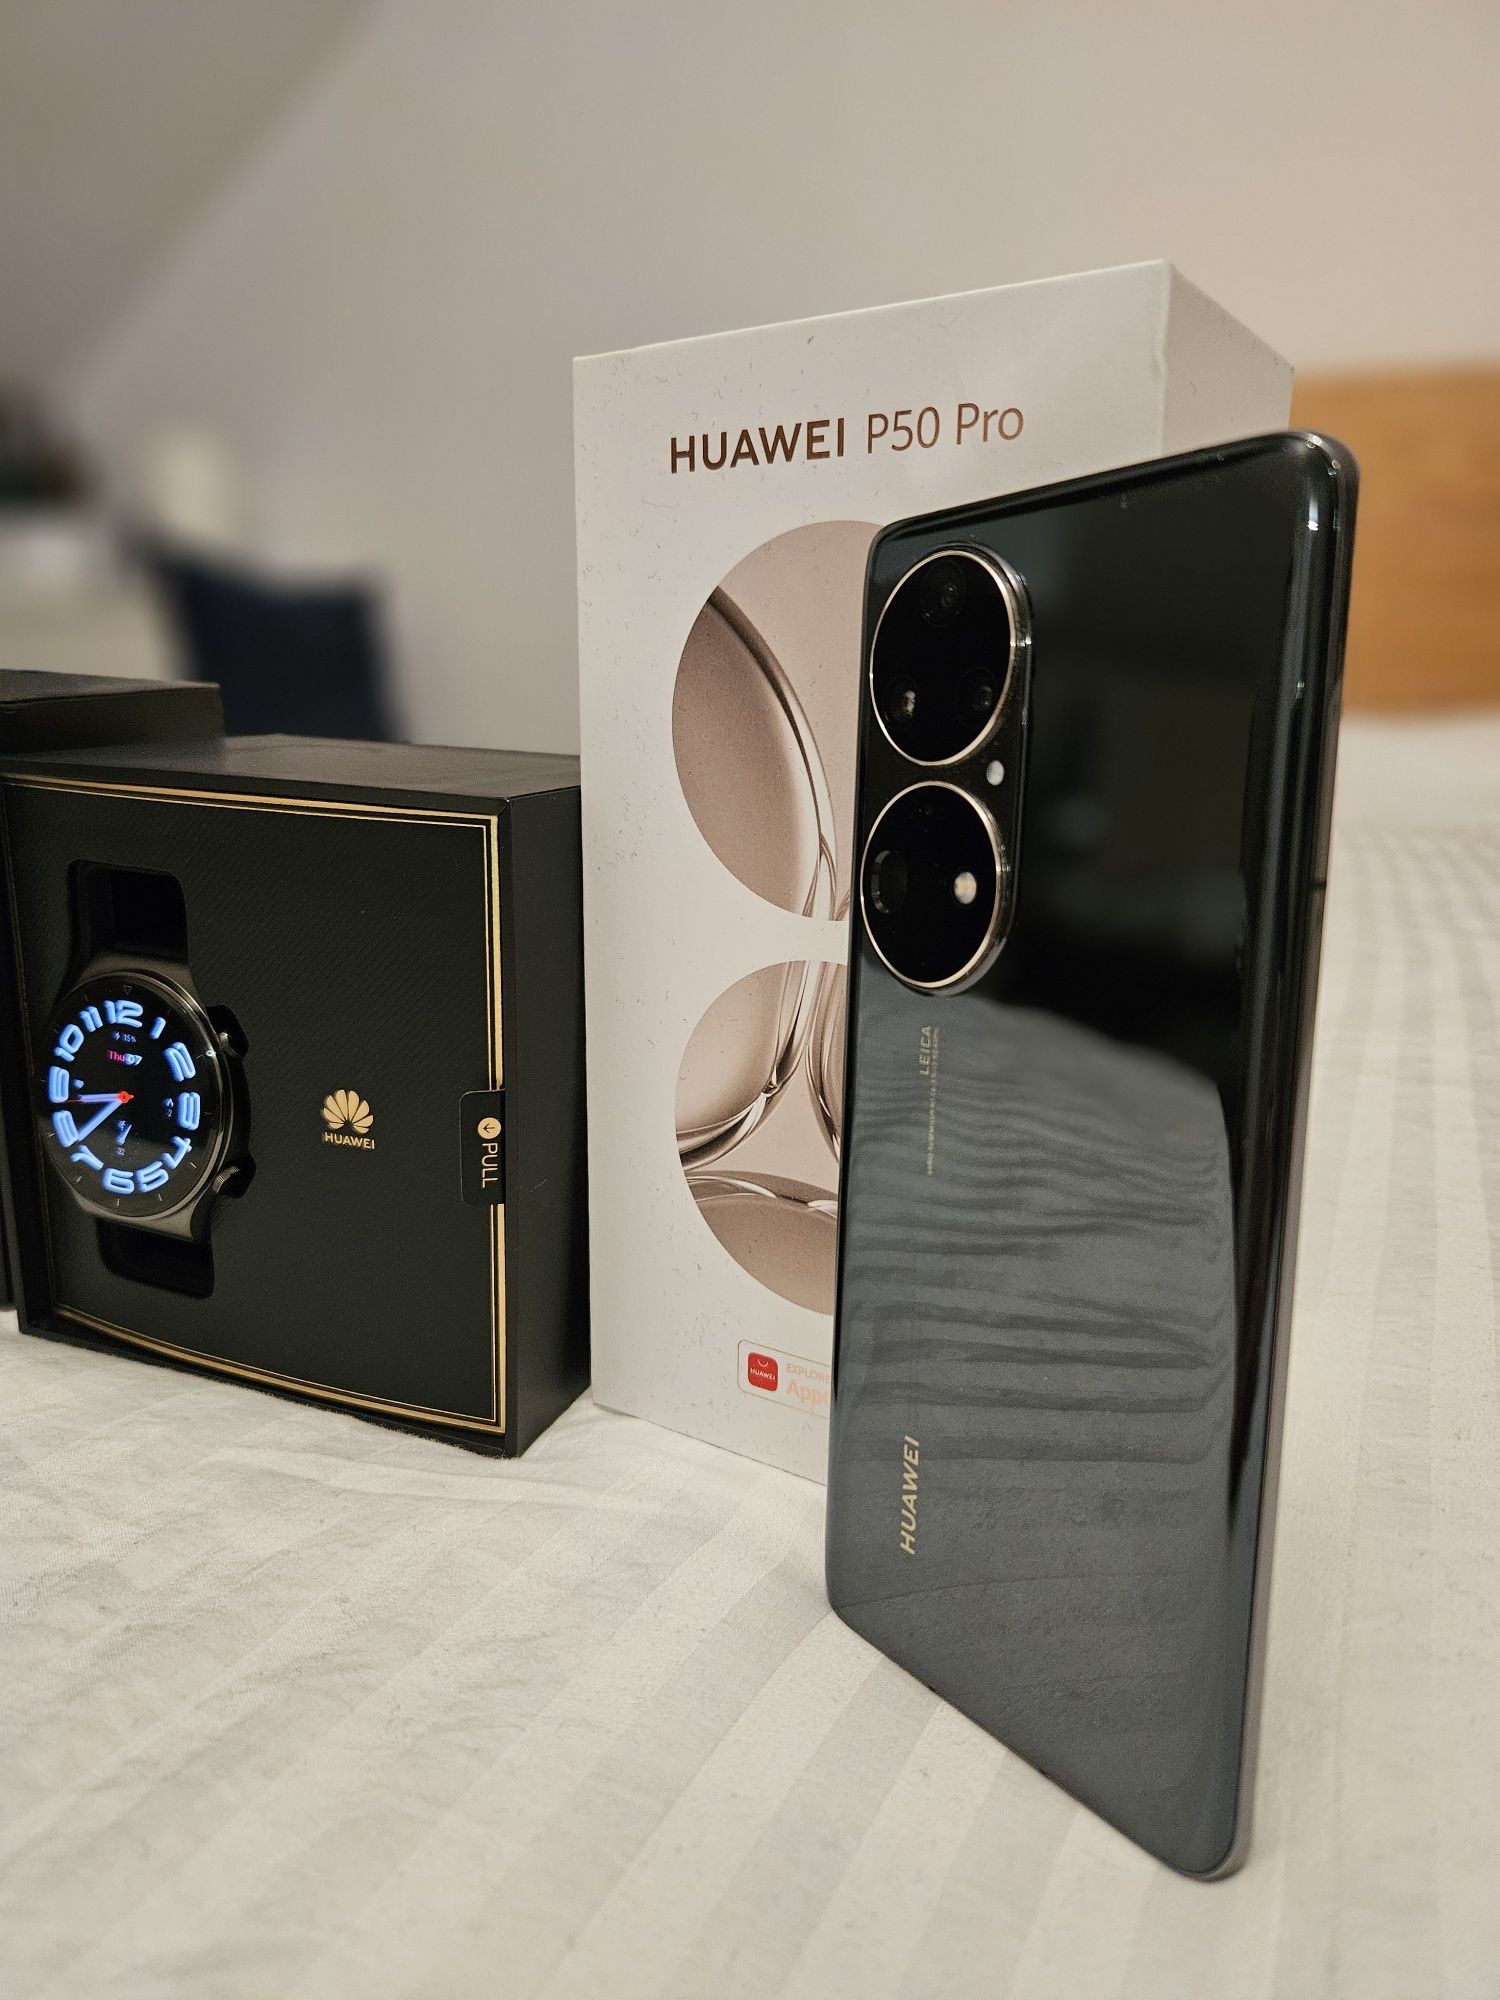 Huawei P50 Pro 256GB, gratis Huawei Watch GT 2pro